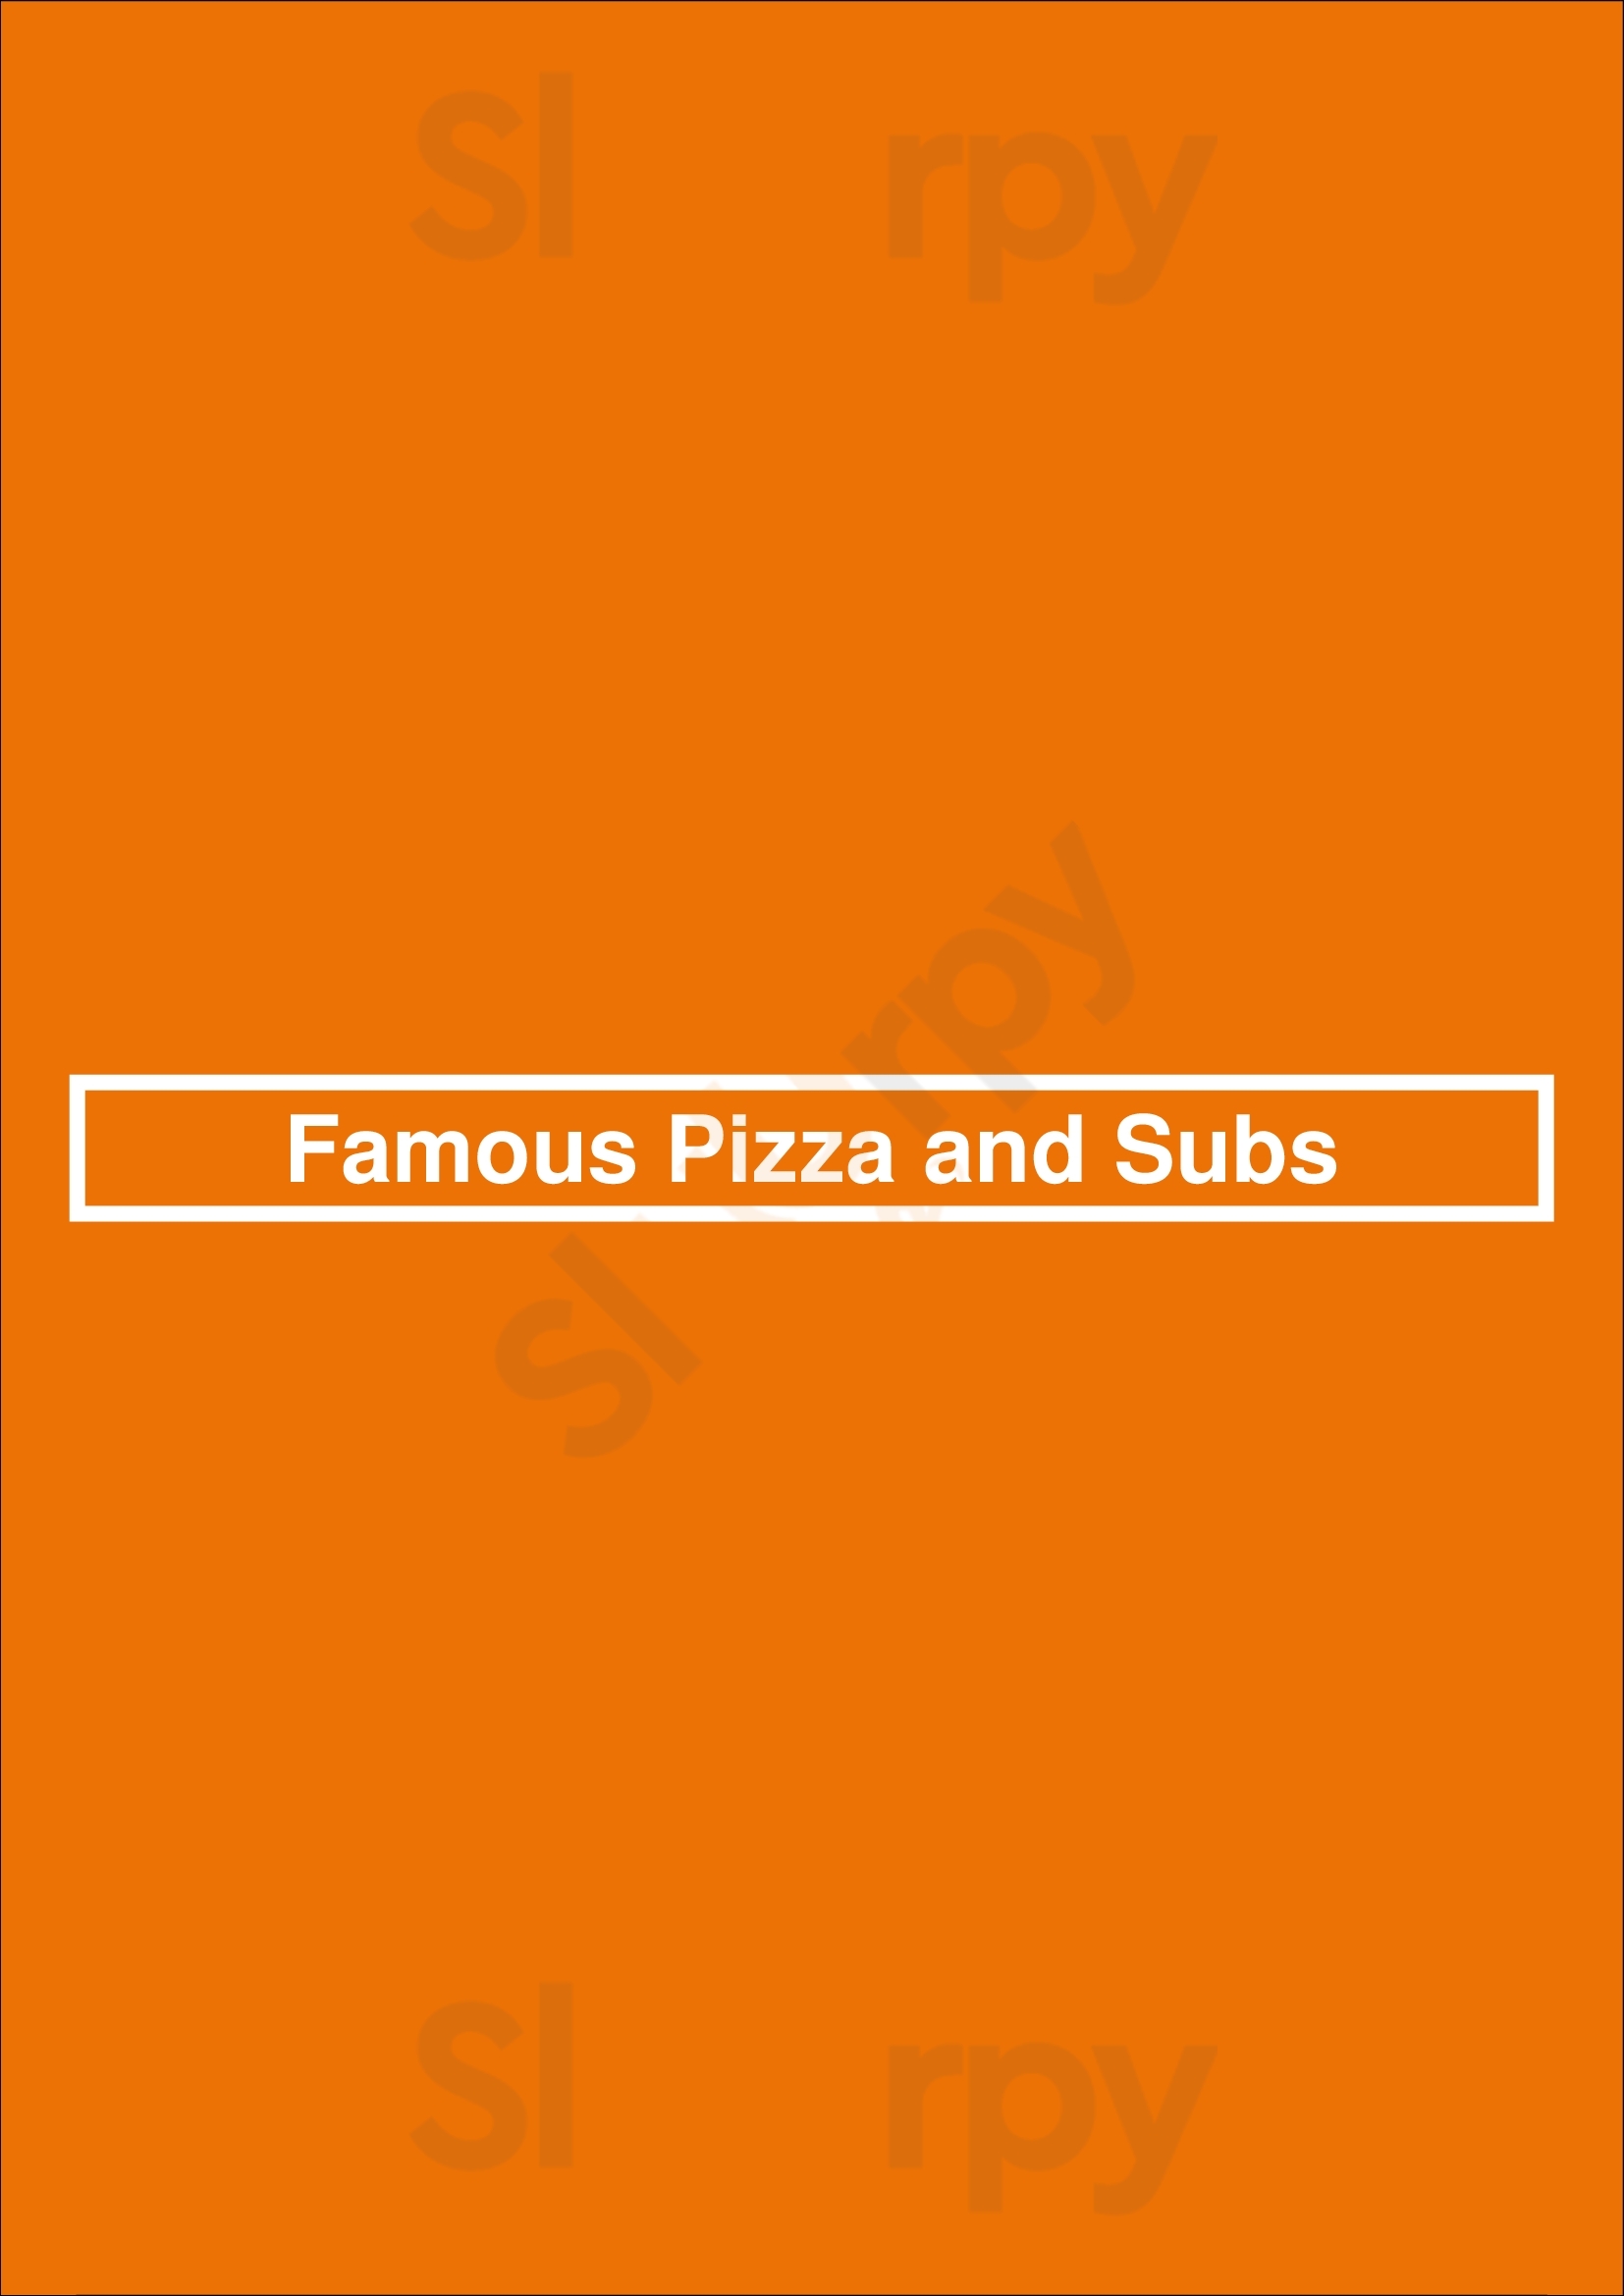 Famous Pizza And Subs Denver Menu - 1